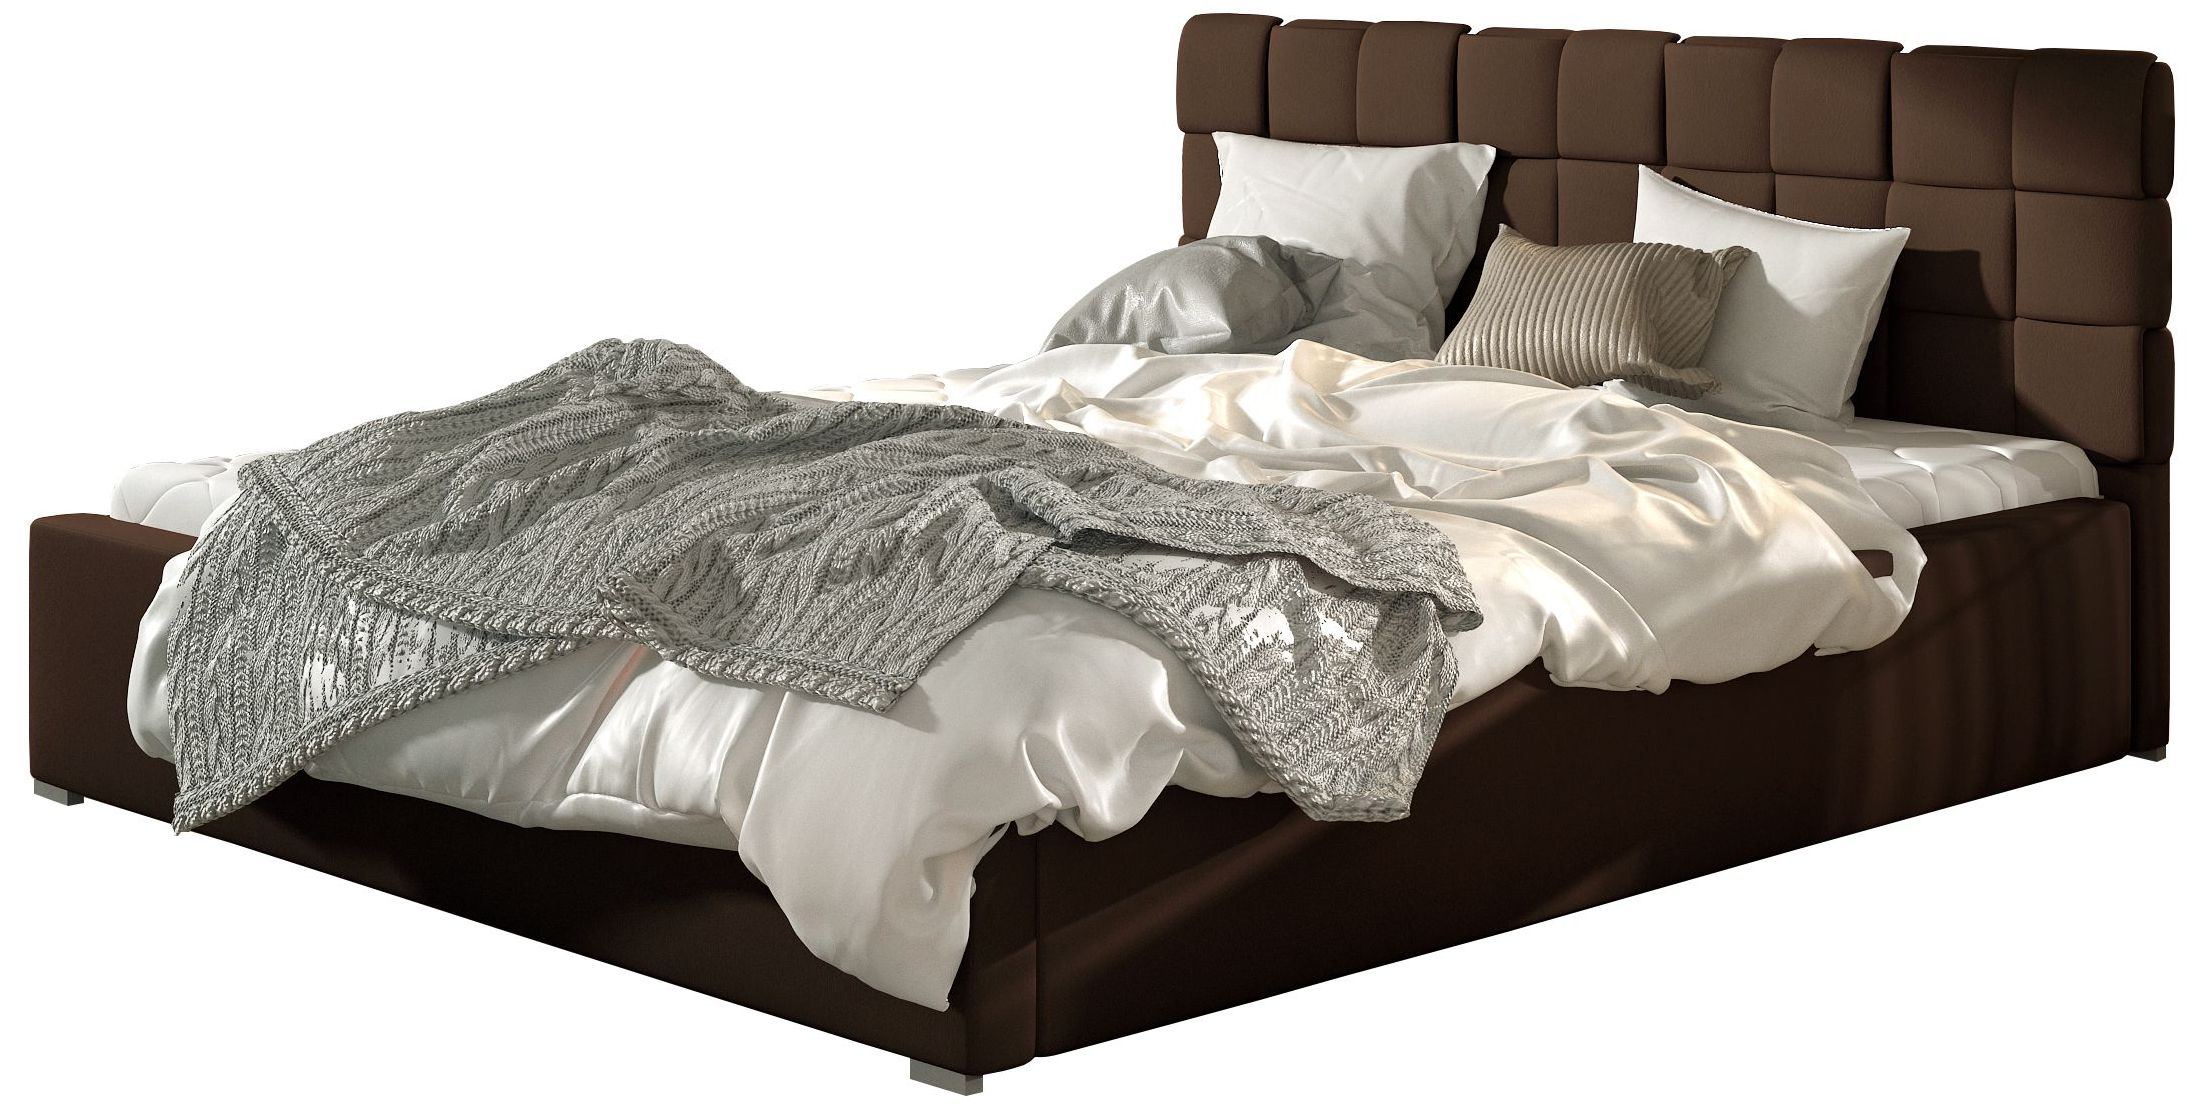 PoliHome Επενδυμένο κρεβάτι Grady-140 x 200-Χωρίς μηχανισμό ανύψωσης-Kafe